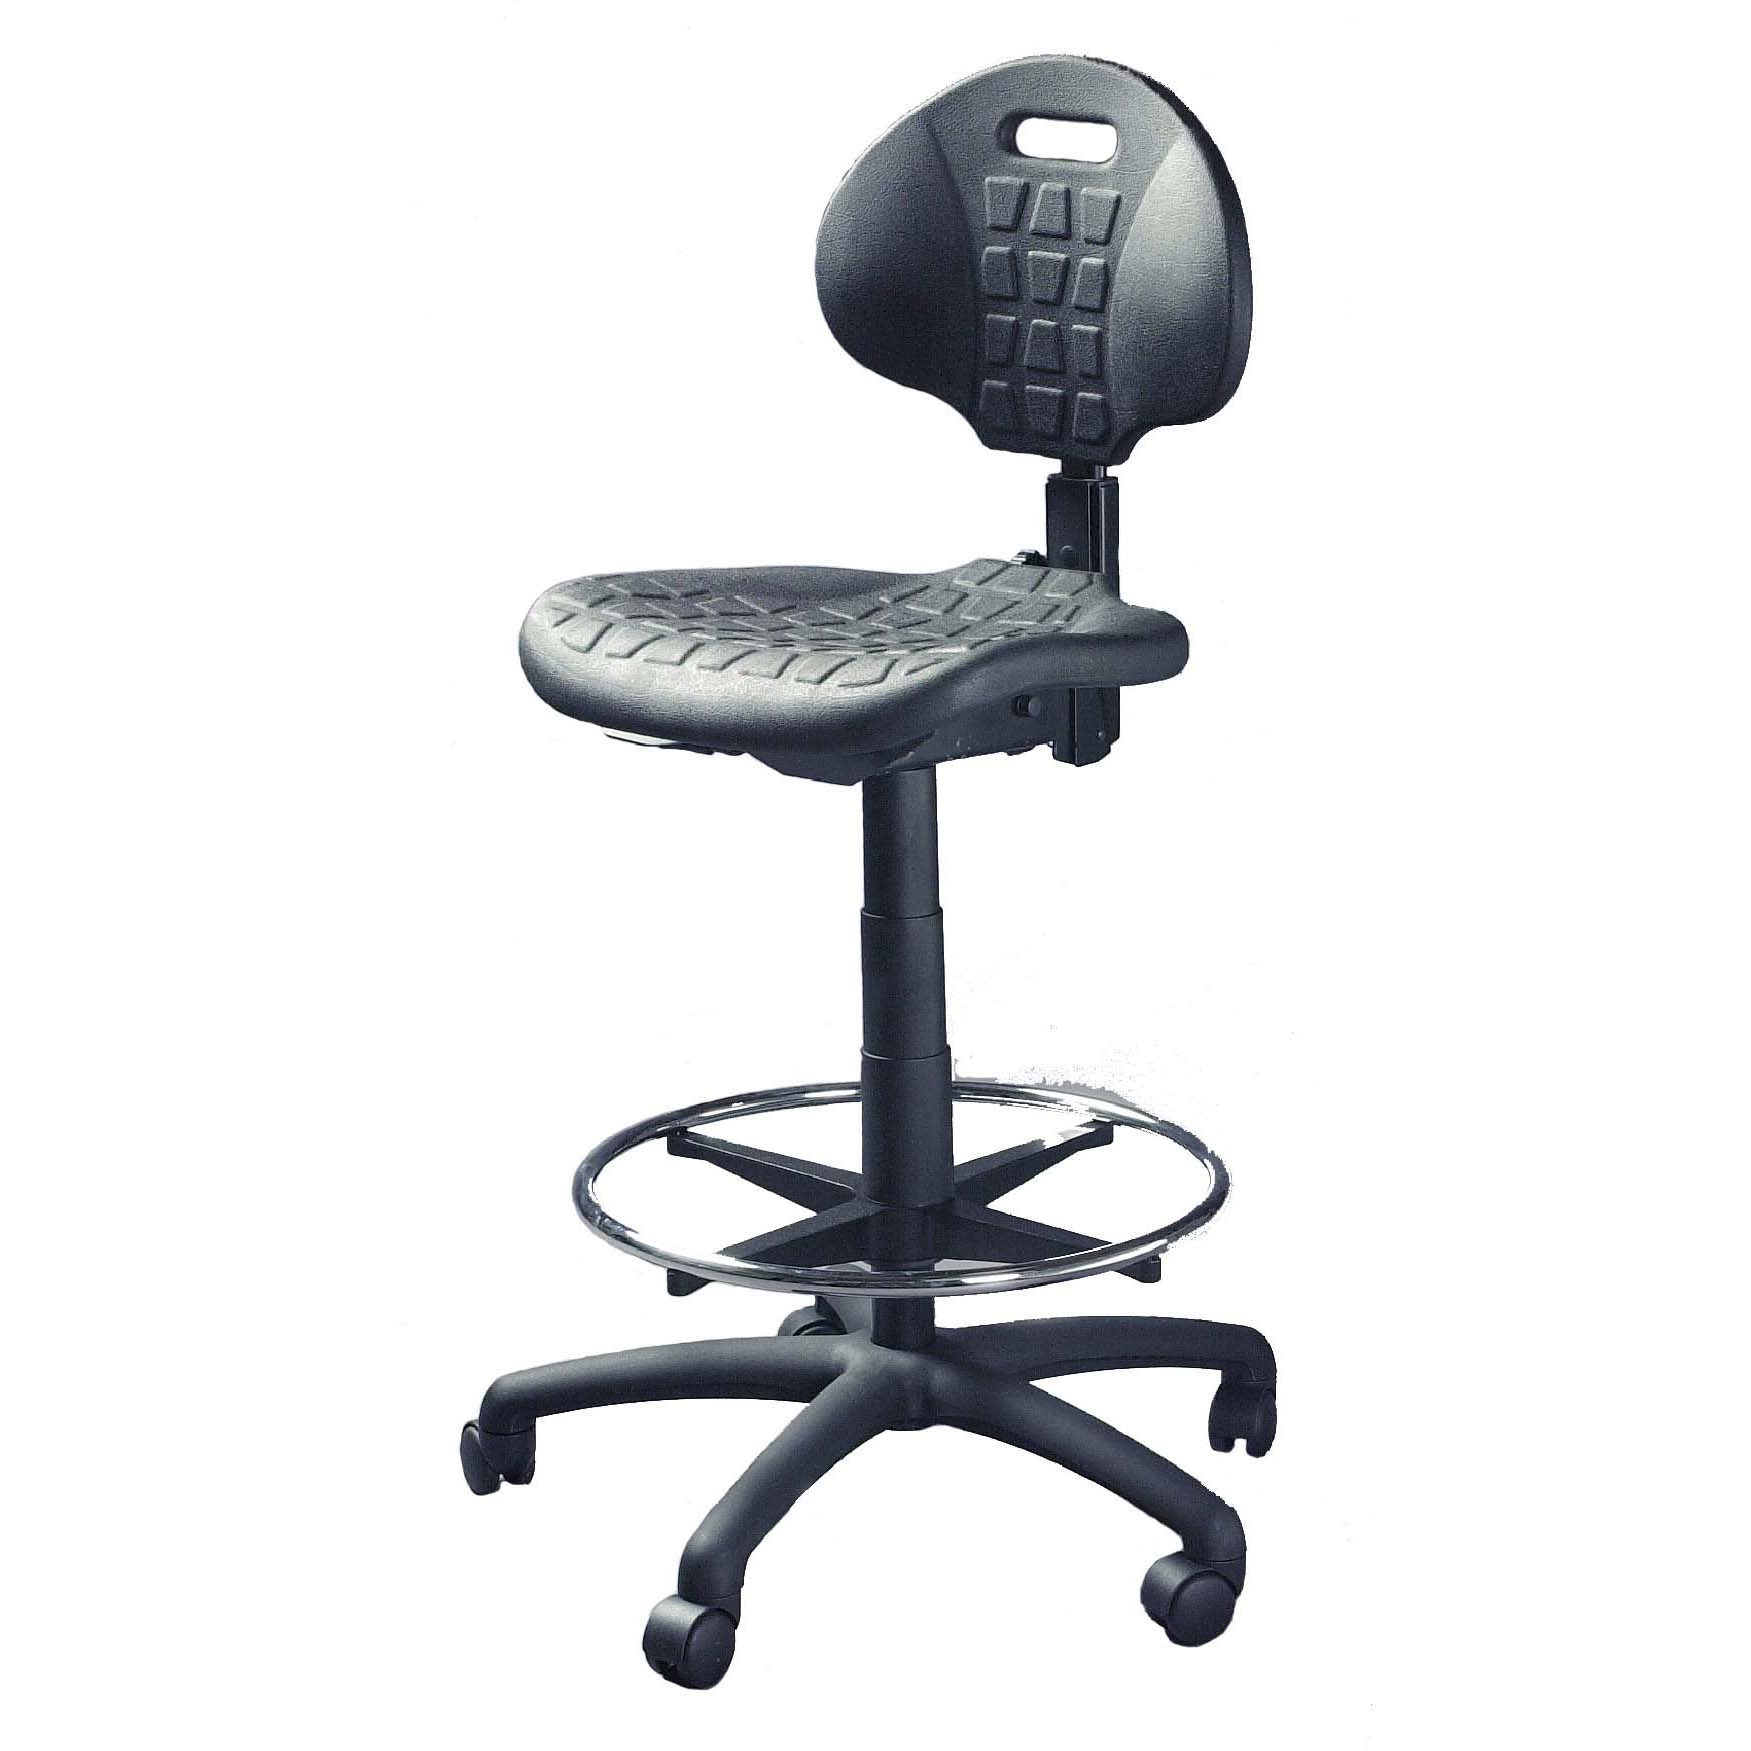 Lab stool chair shop stool chair laboratory chair lab chairs